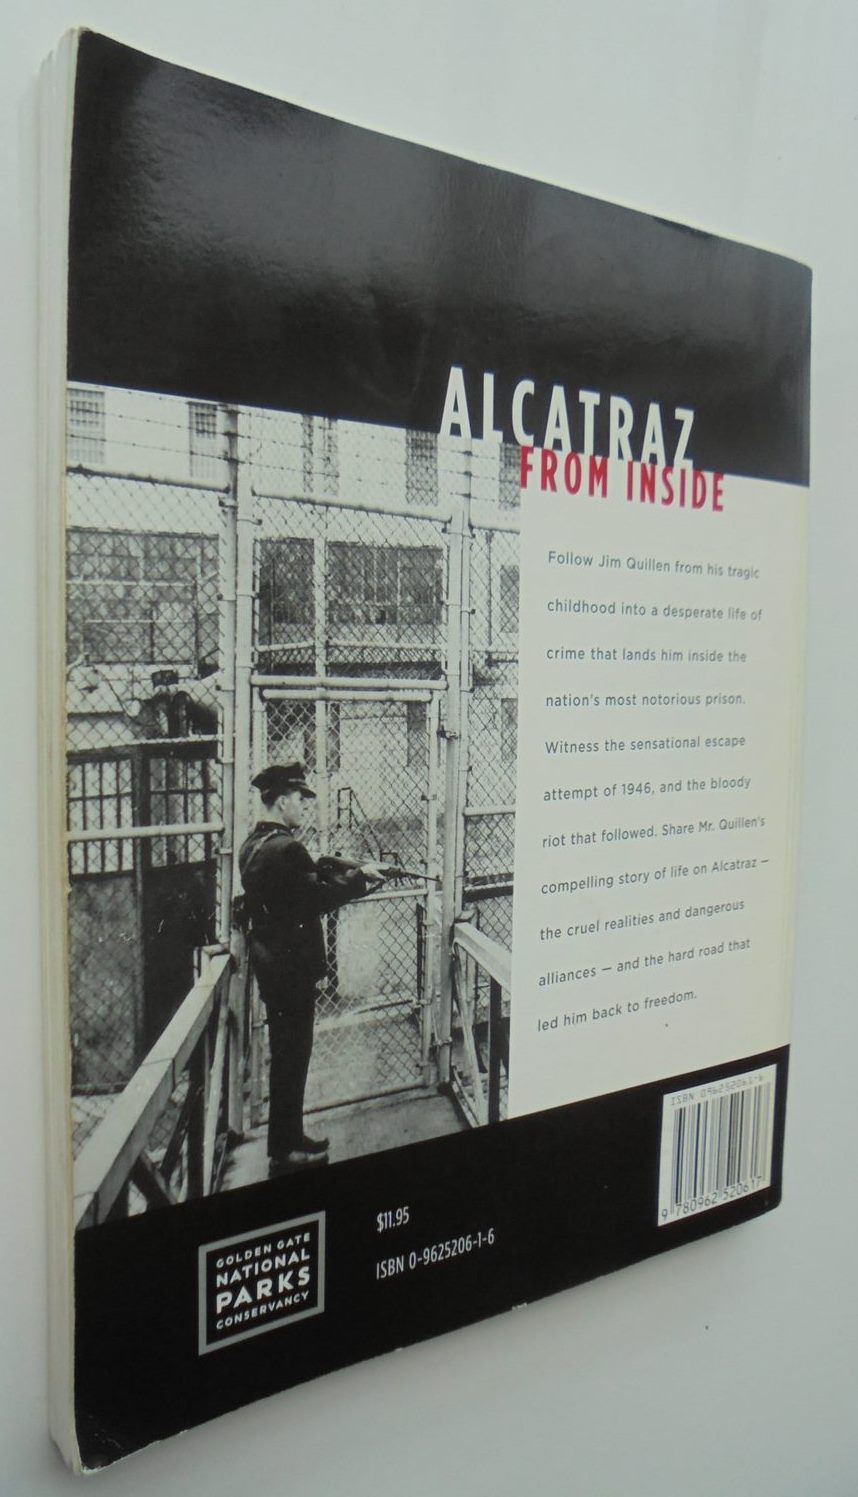 Alcatraz from inside. By Jim Quillen – Phoenix Books NZ